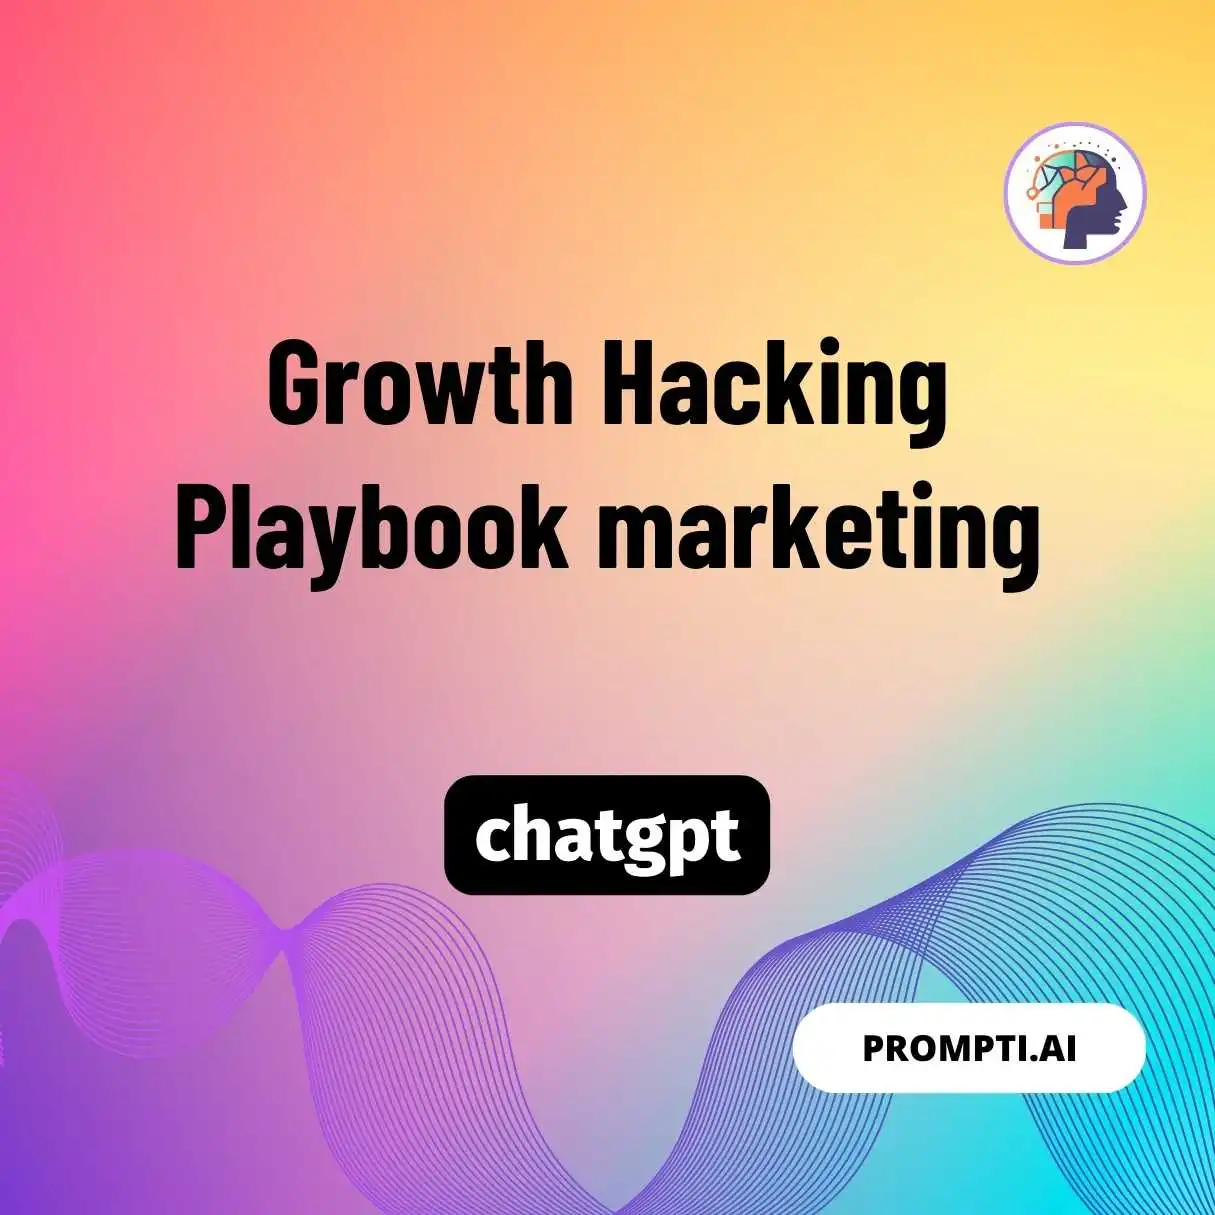 Growth Hacking Playbook marketing